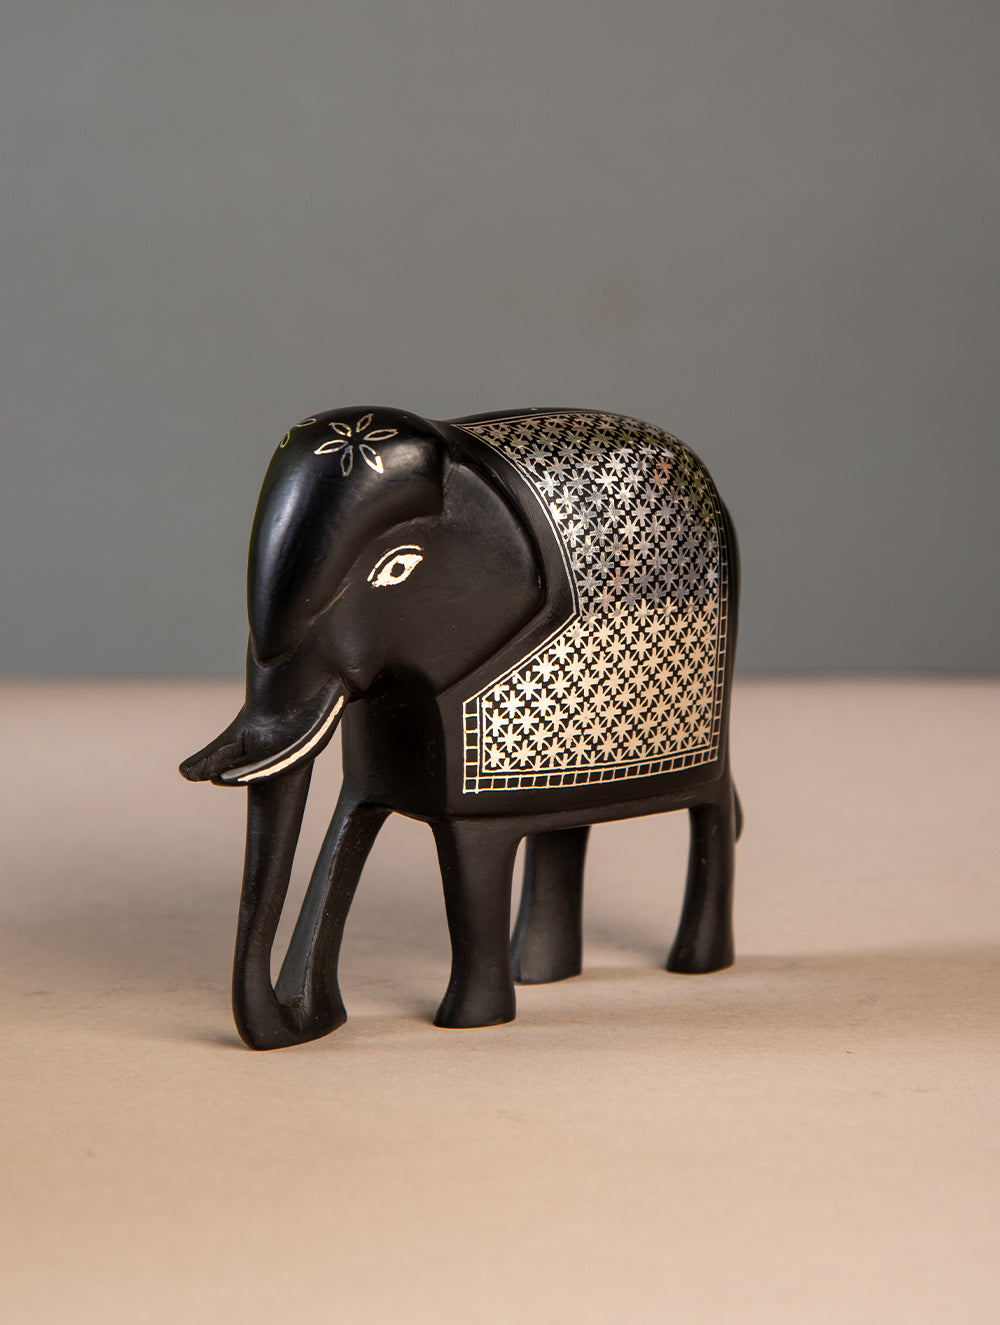 Load image into Gallery viewer, Bidri Craft Curio - Elephant